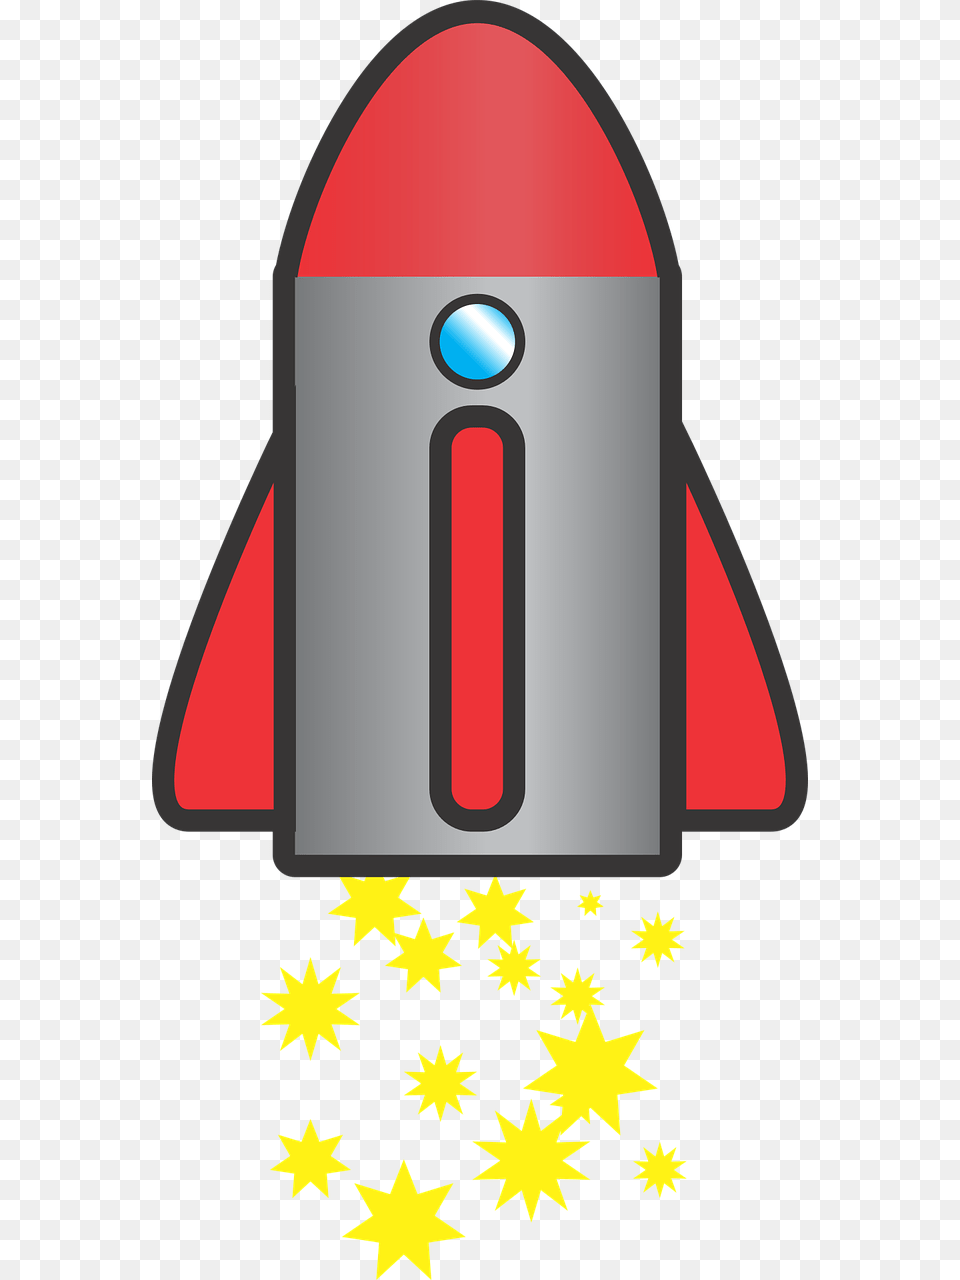 Rocket Blast Off Space Free Photo Rocket Blast Off, Symbol Png Image